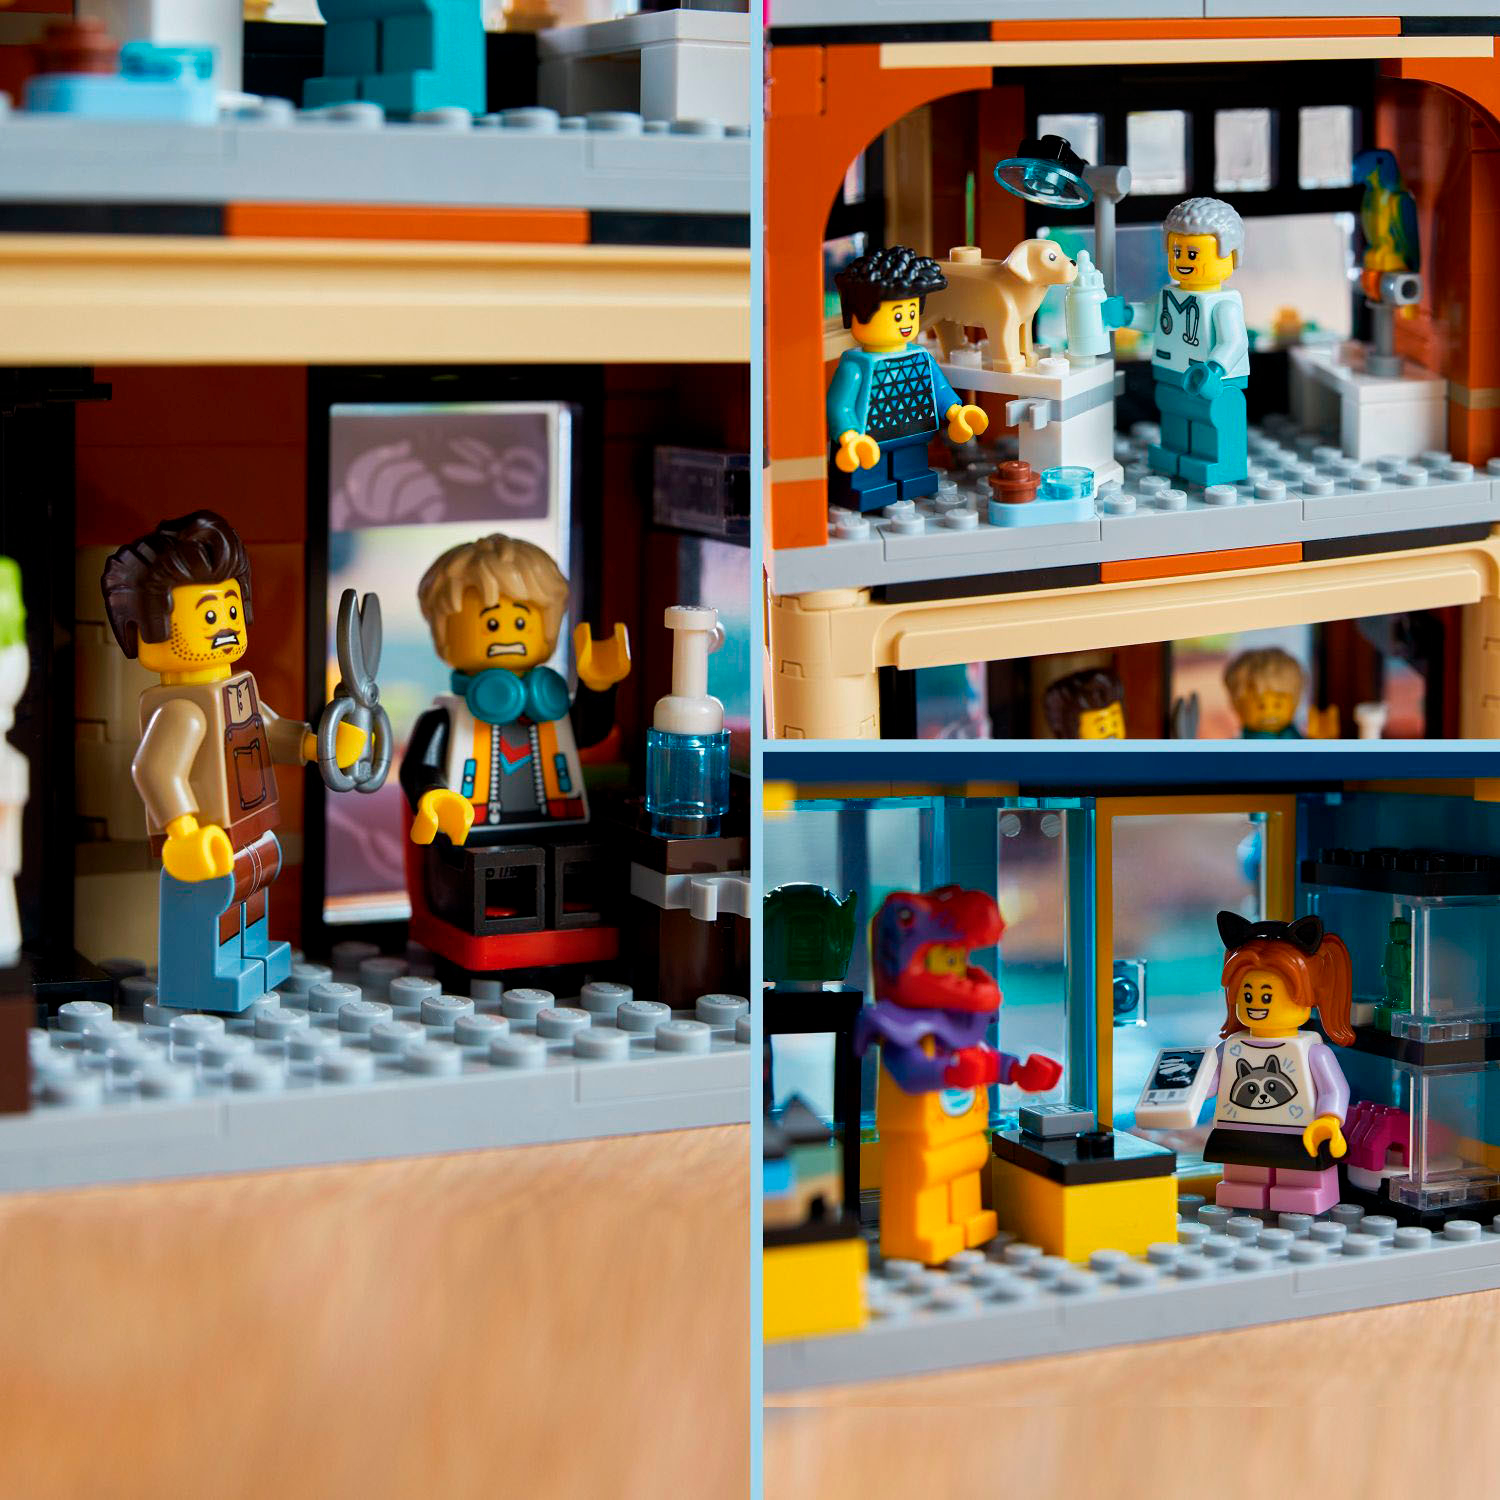 LEGO City Downtown 60380 6427595 - Best Buy